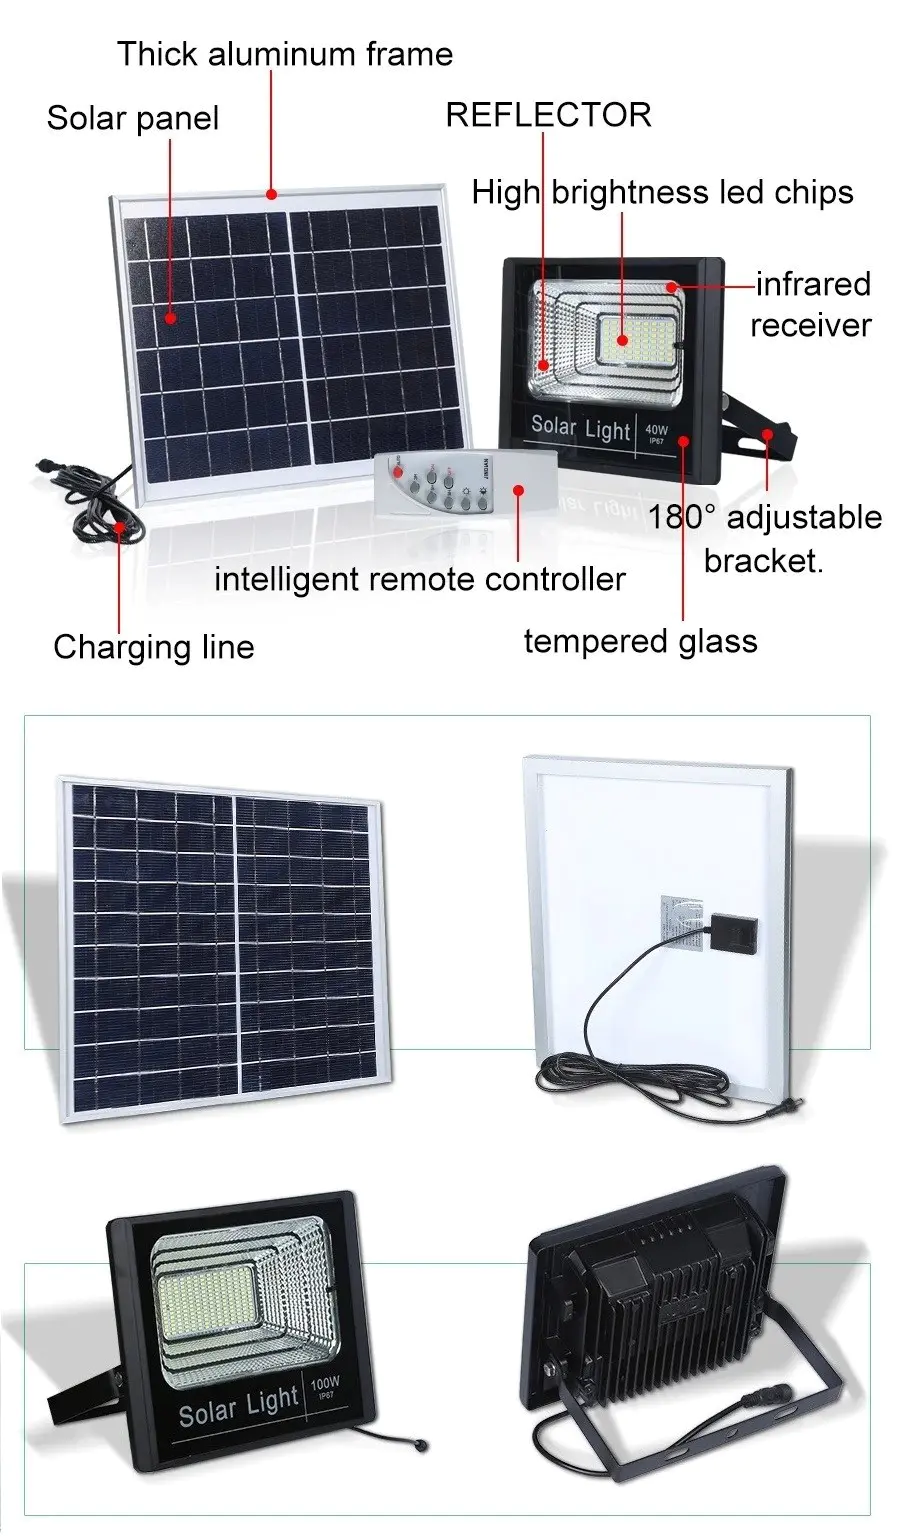 Litel Technology solar powered flood lights bulk production for garage